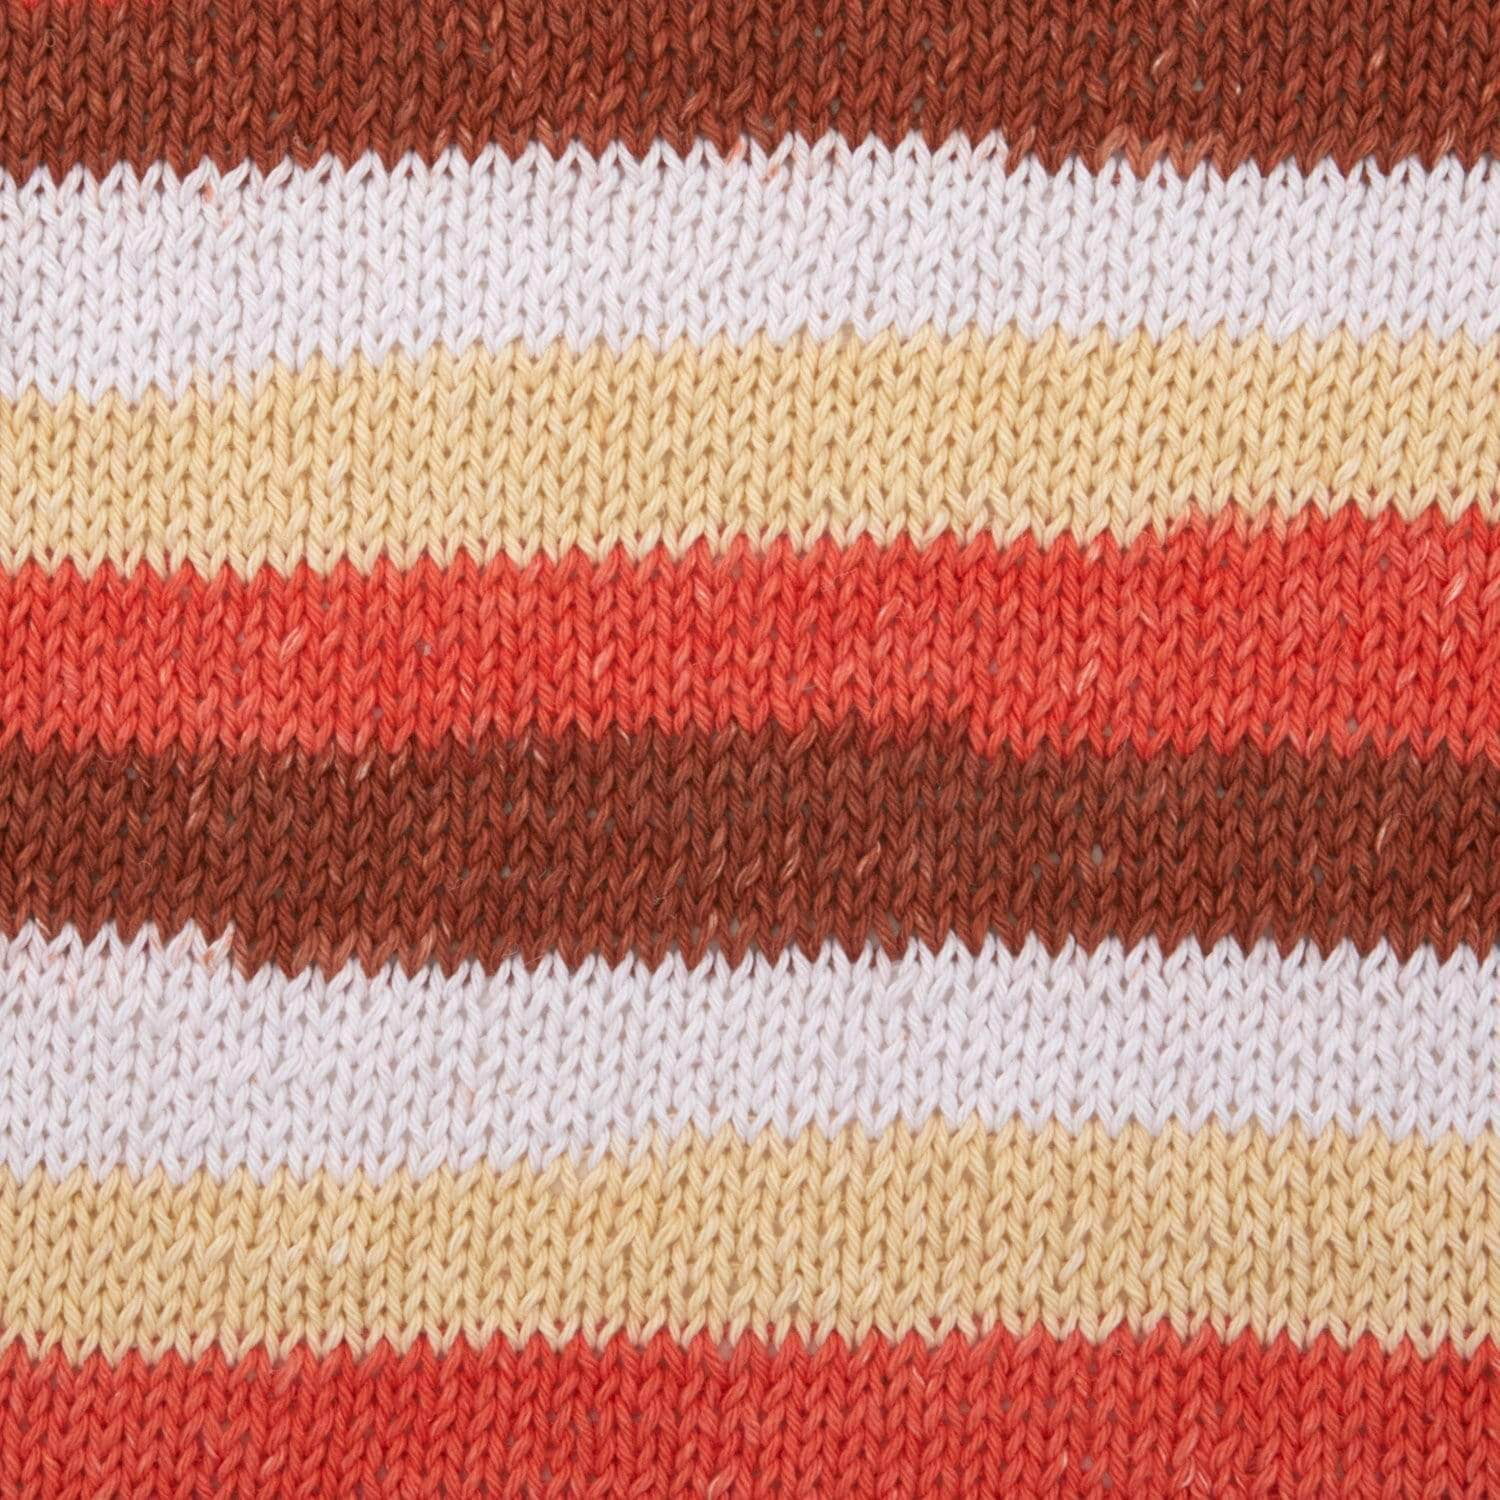 Premier Yarns Home Cotton Yarn - Multi-Spring Stripe, 1 - Kroger